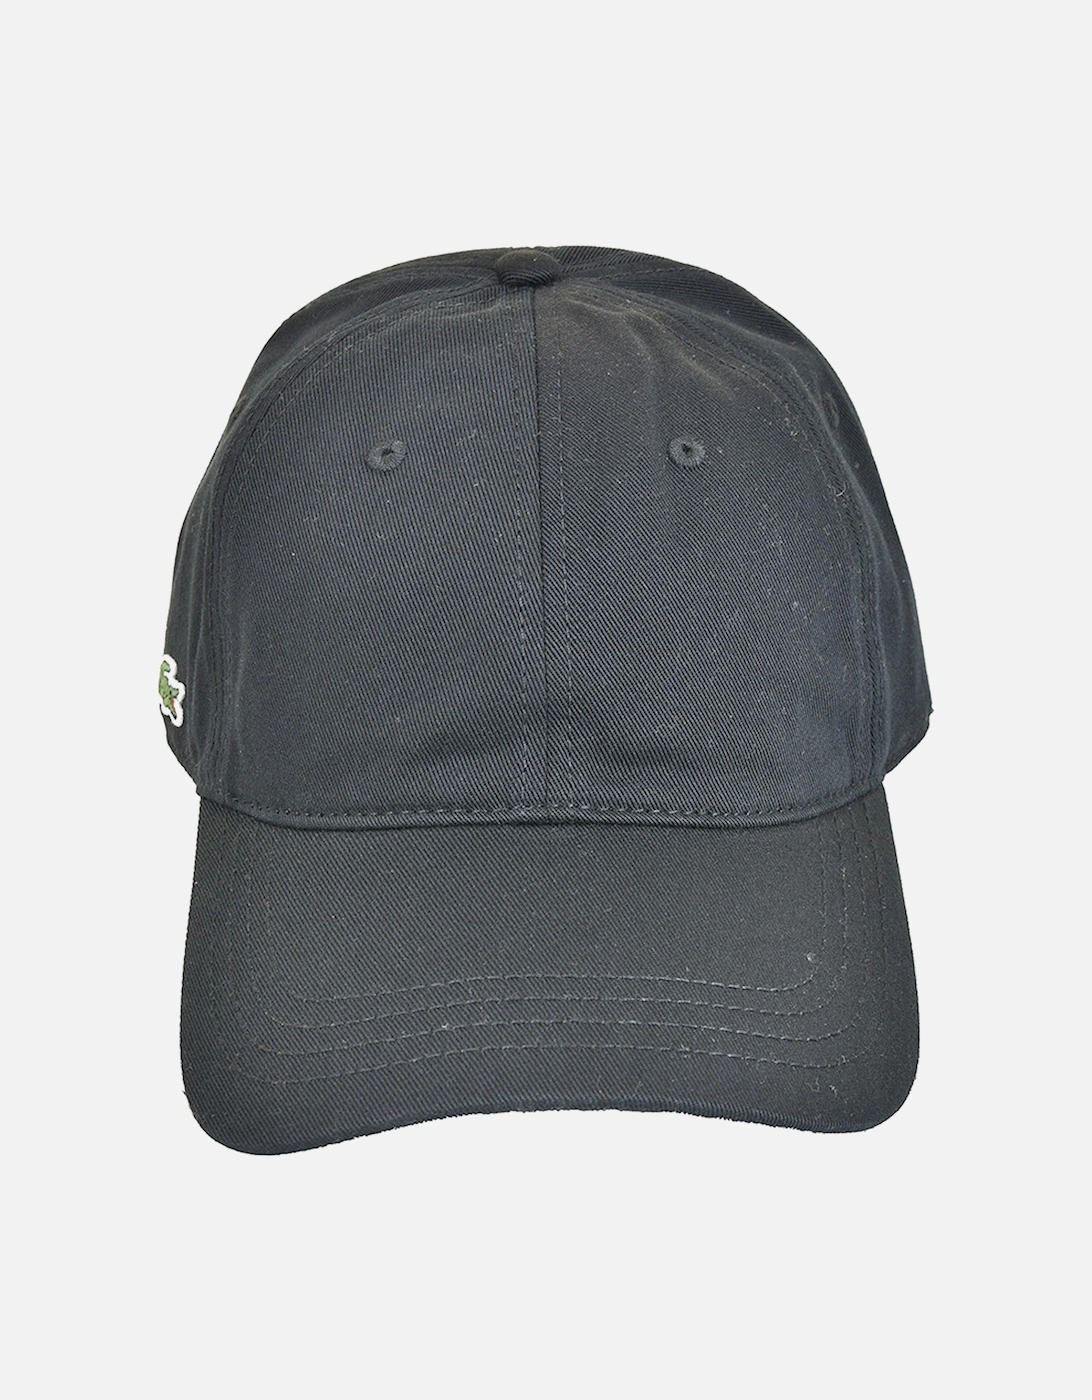 Mens Adjustable Baseball Cap (Black)